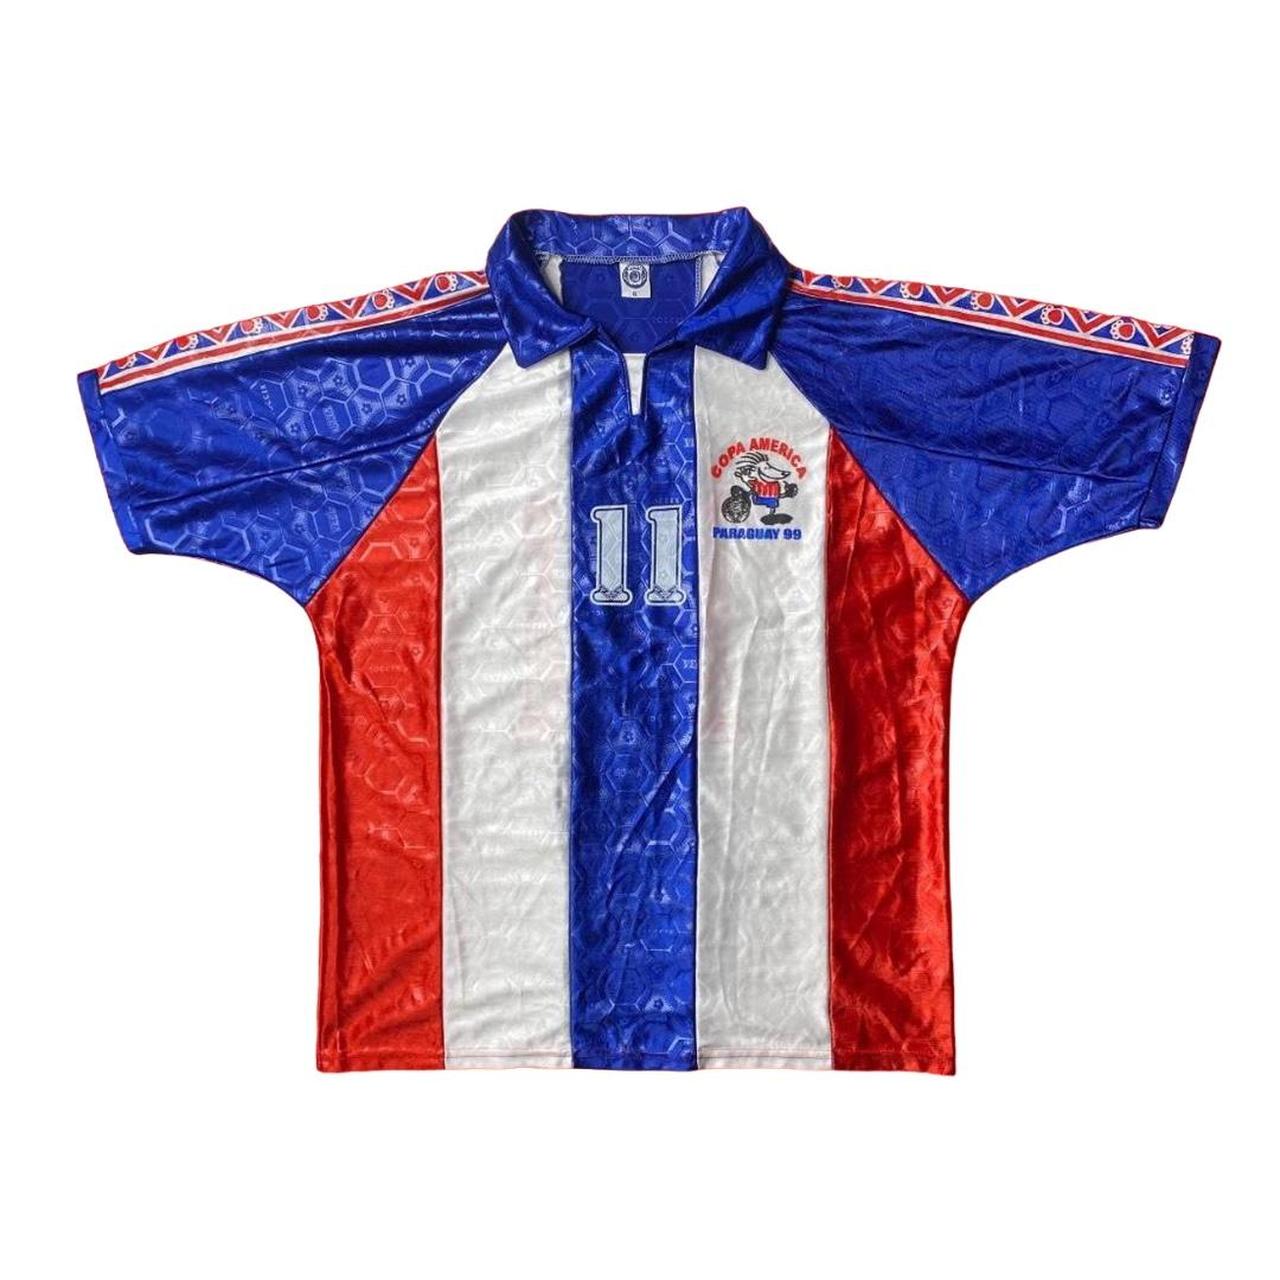 Paraguayan men's national team old-school gear